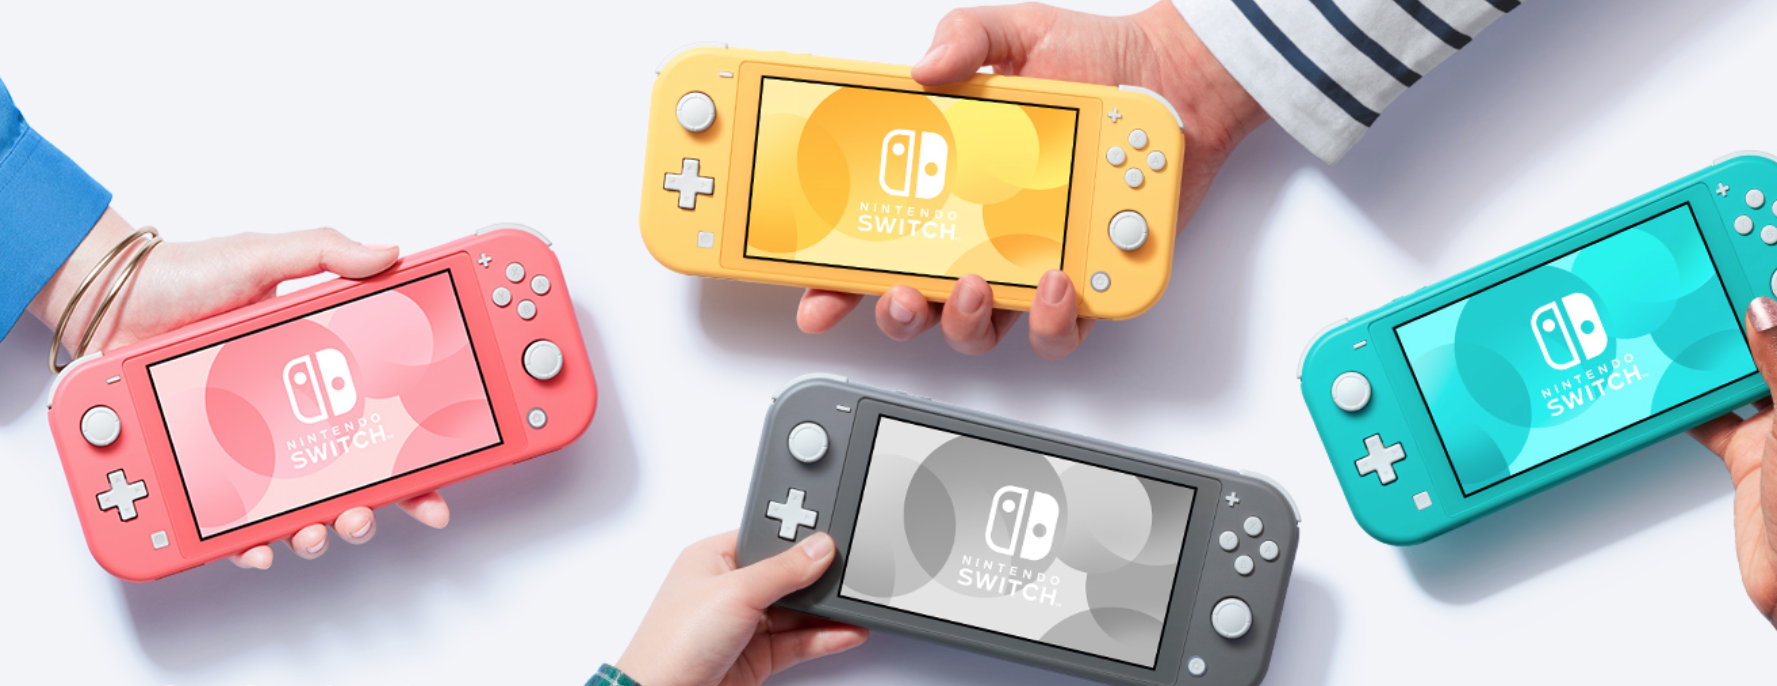 Nintendo представила нежно-розовую Switch Lite | Новости | Cybersport.ru